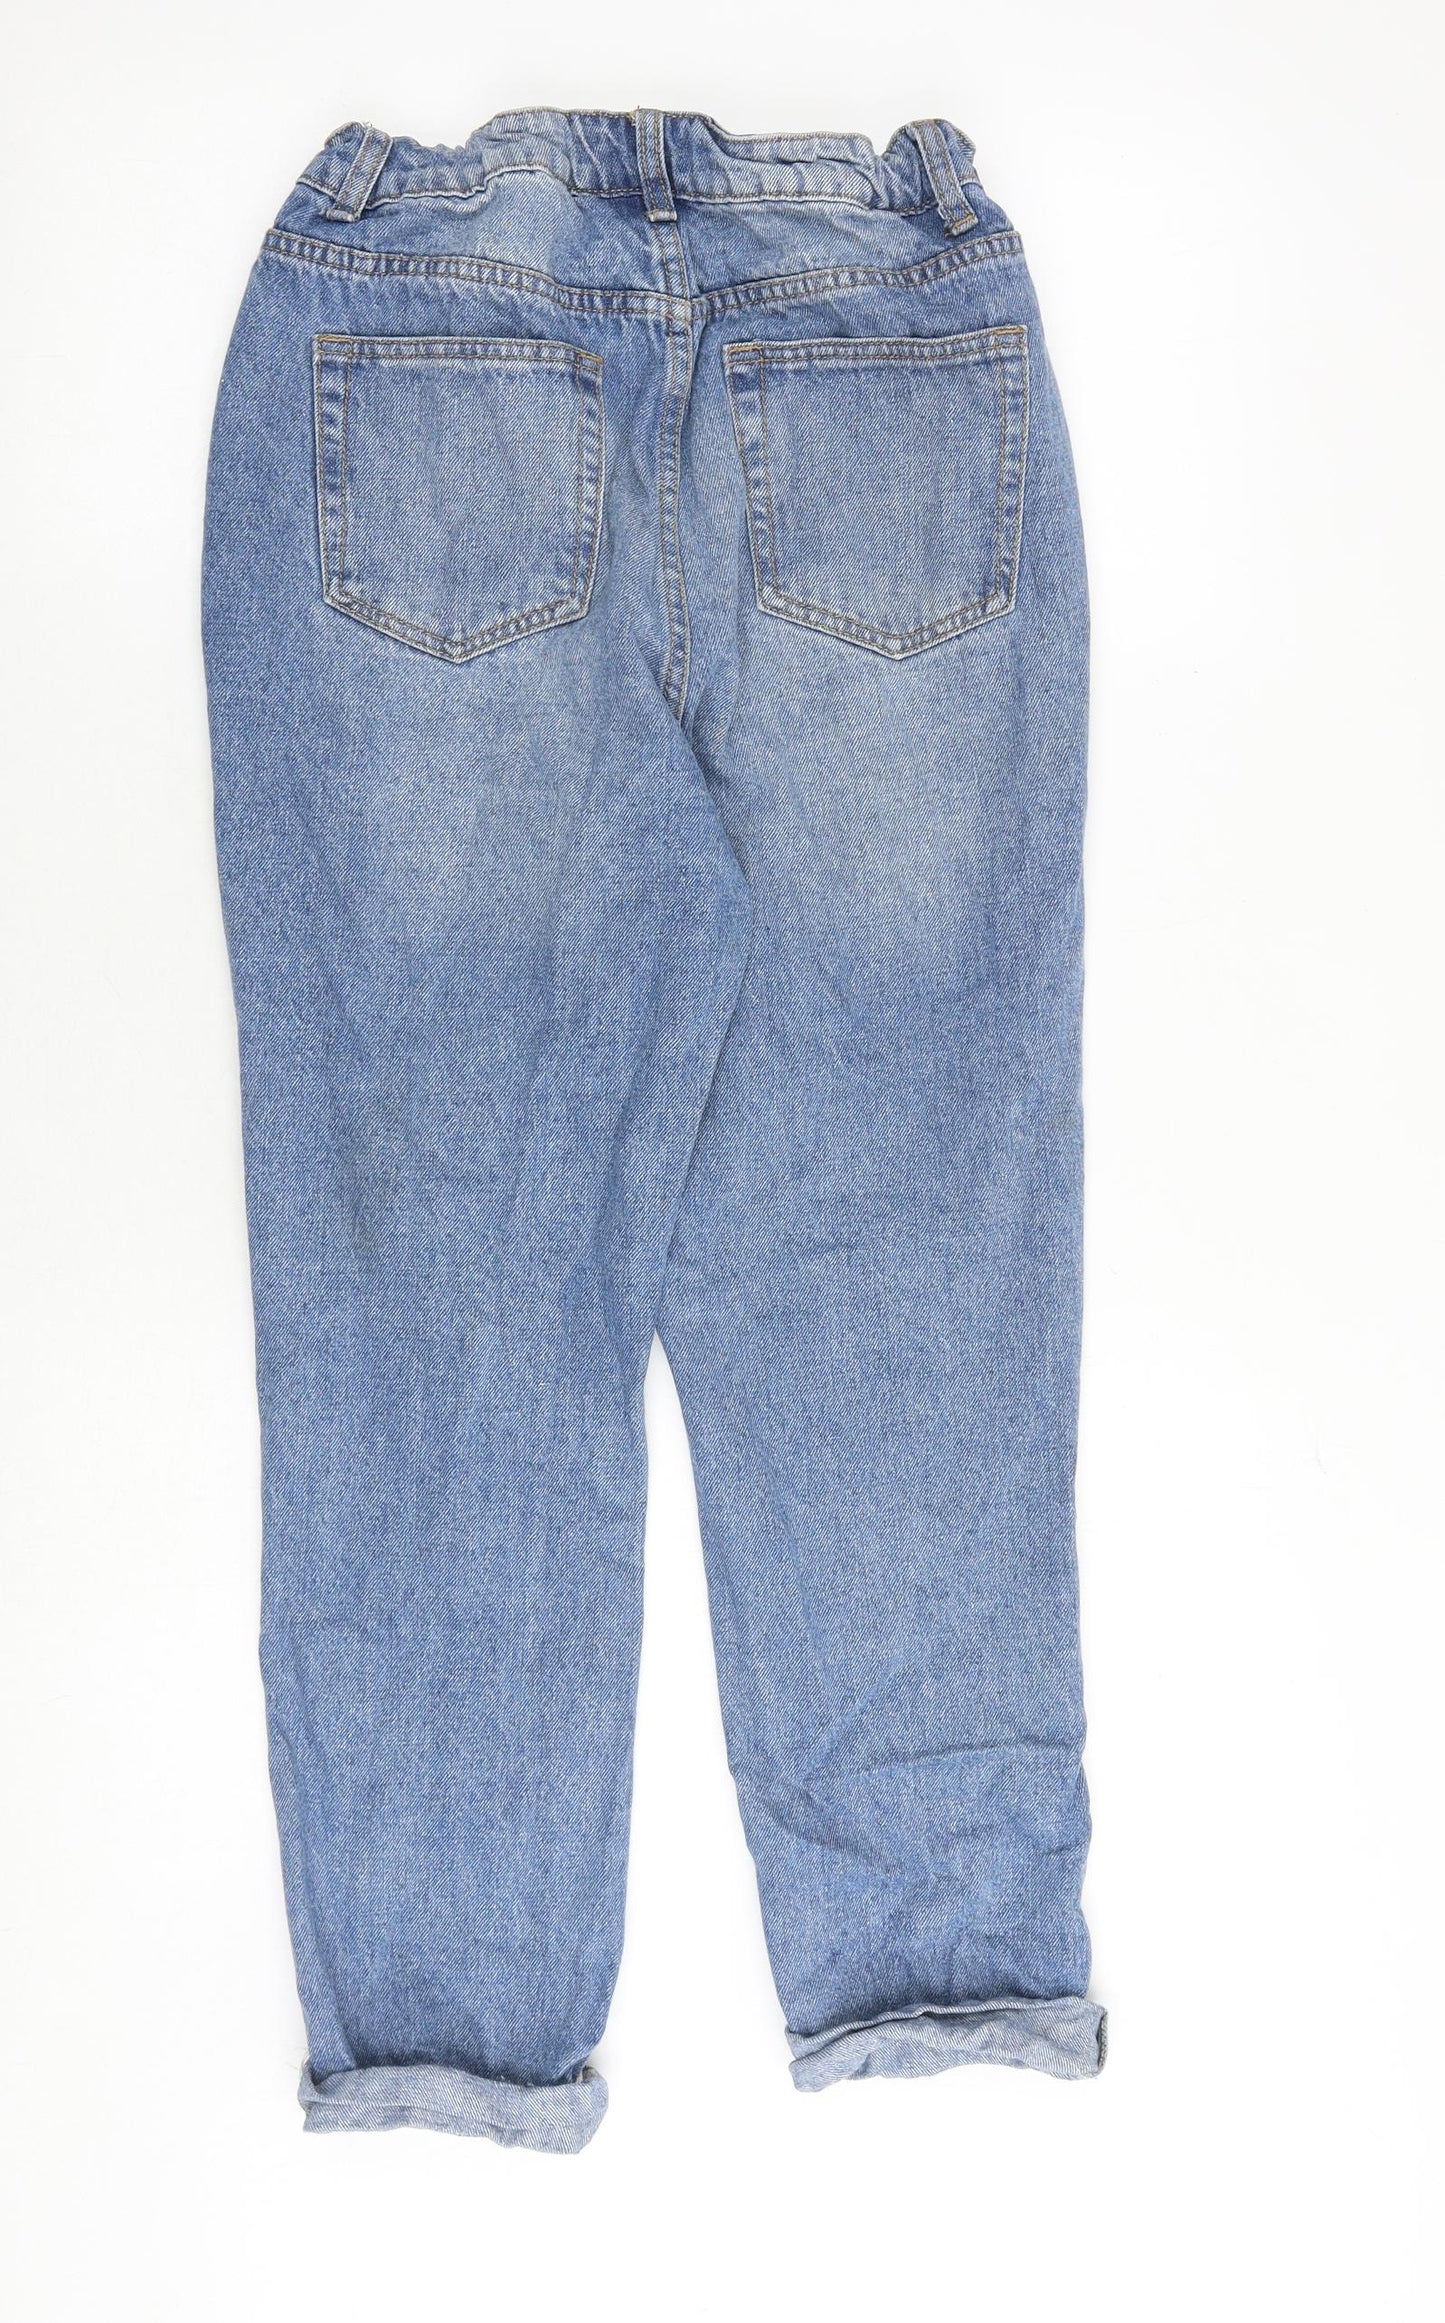 The Rockin Rev Womens Blue Cotton Skinny Jeans Size 10 Regular Zip